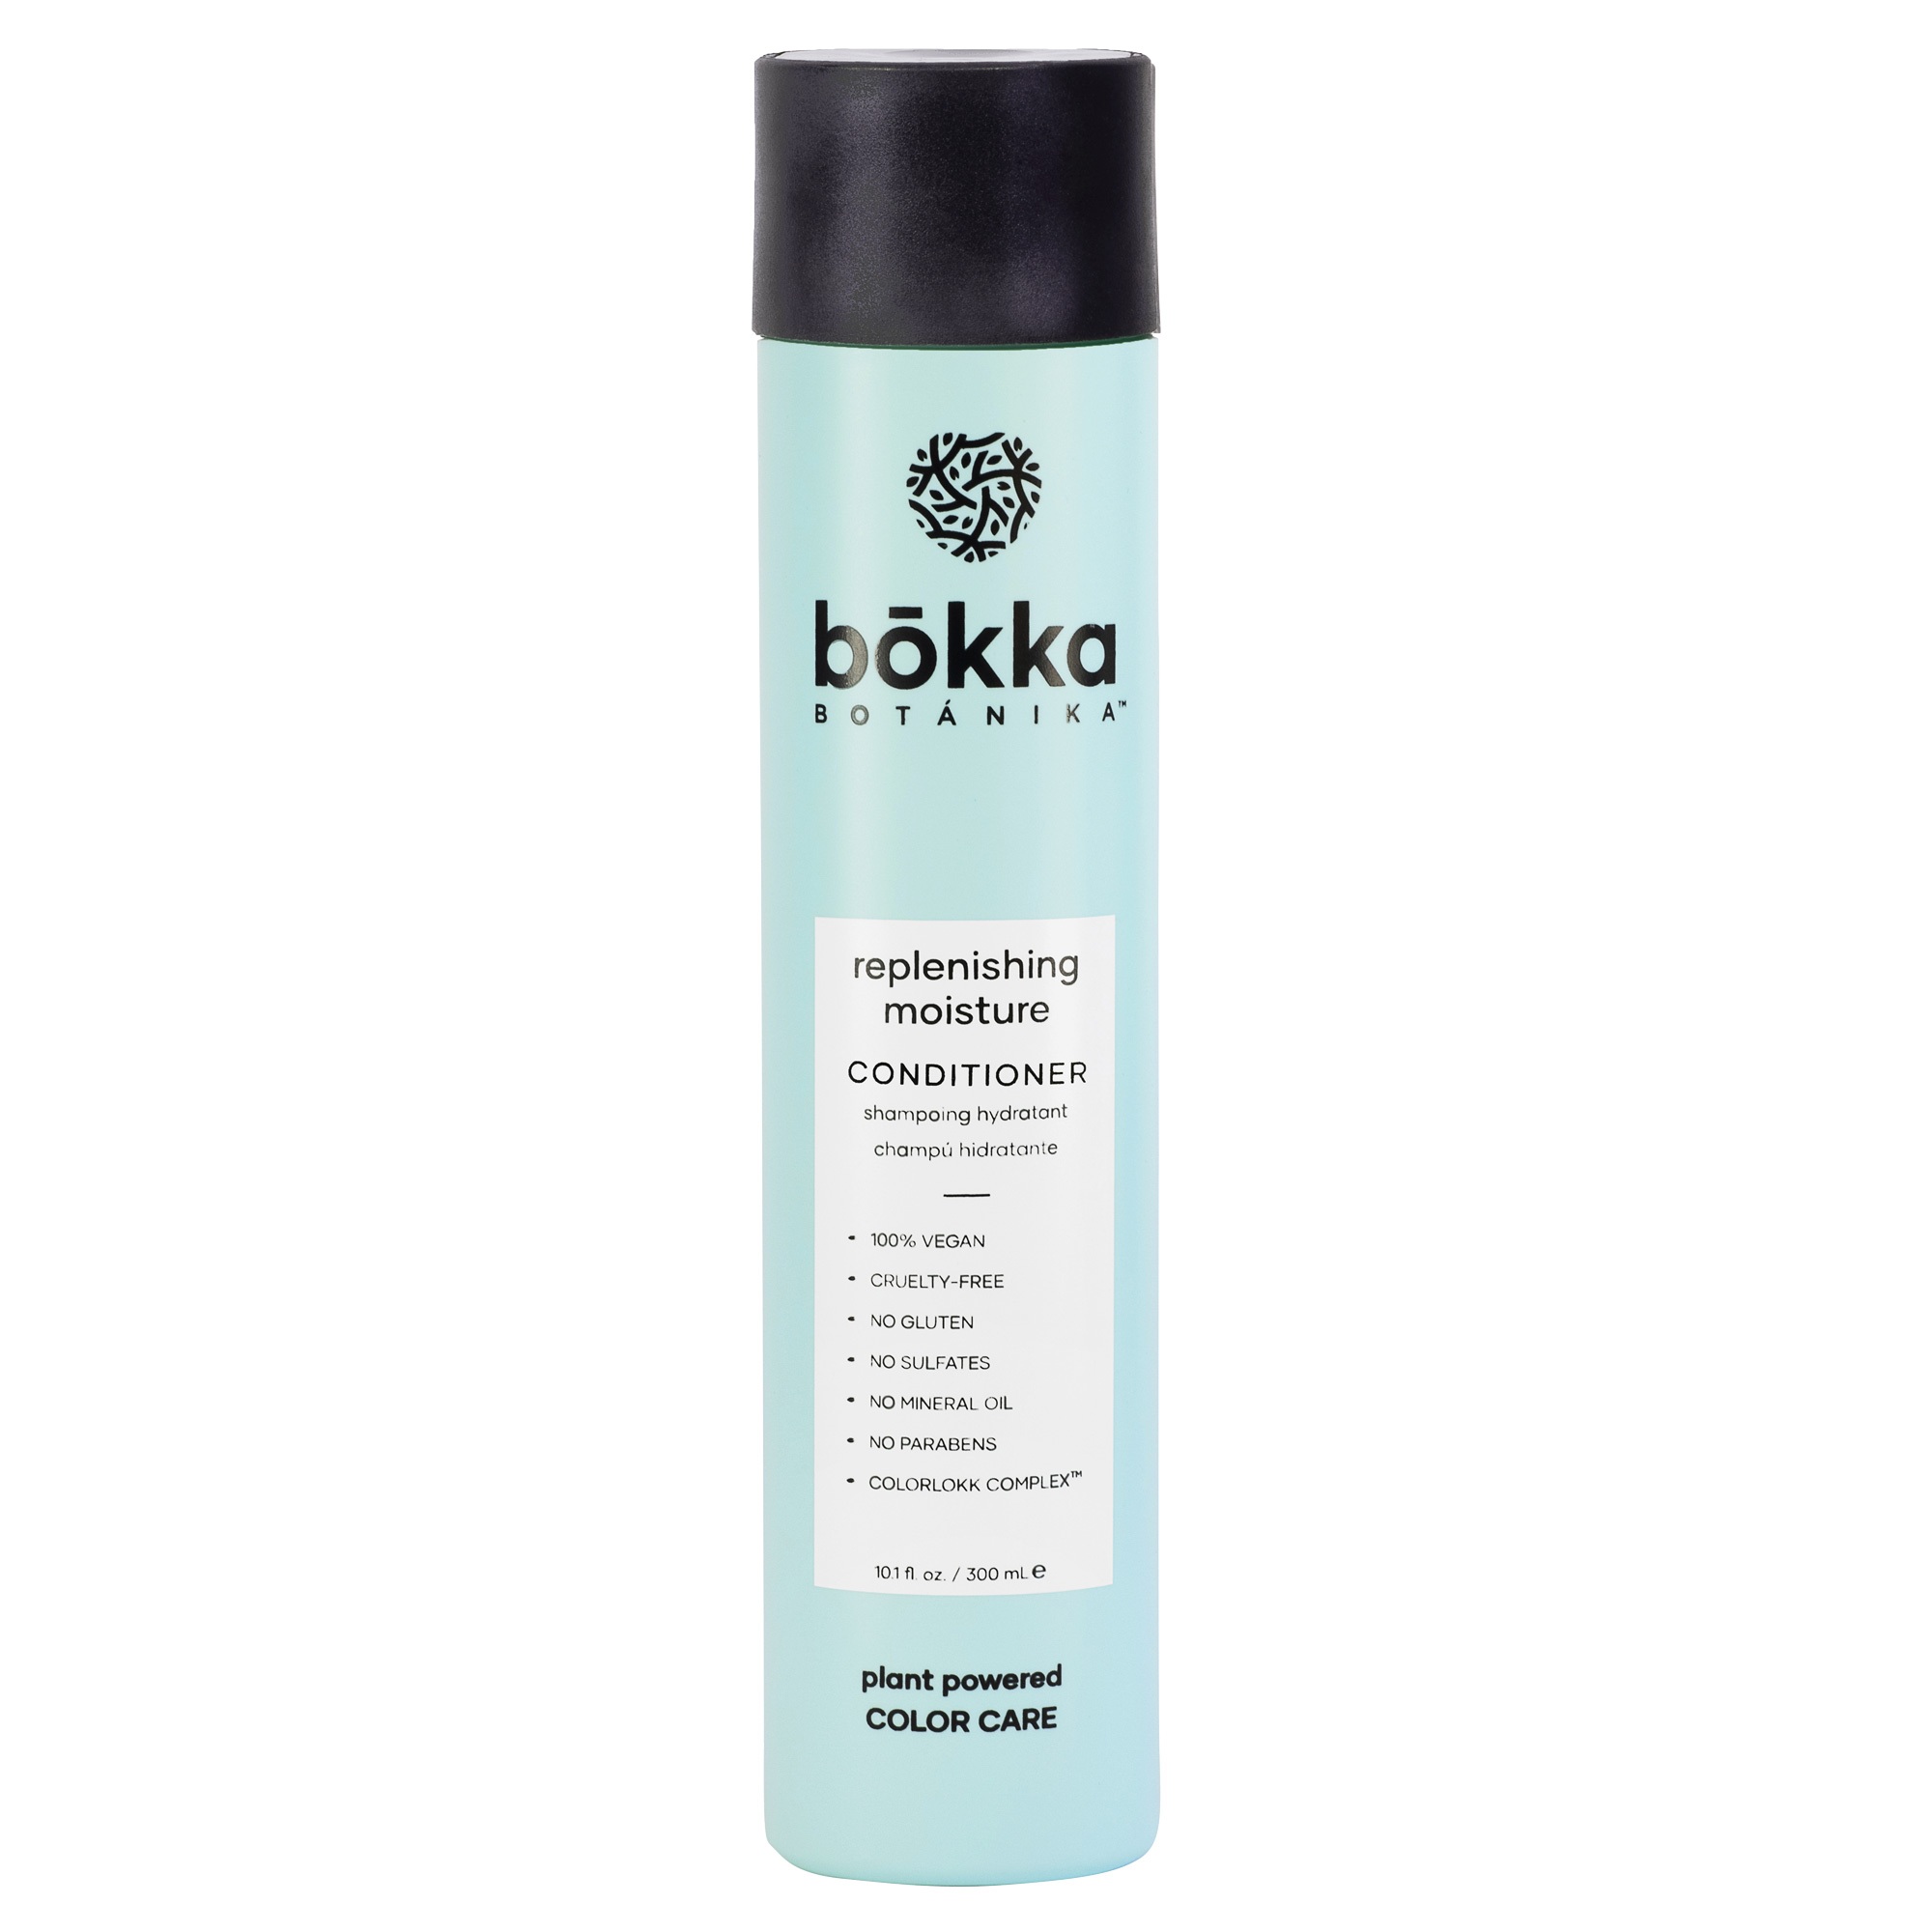 bokka BOTANIKA Replenishing Moisture Conditioner